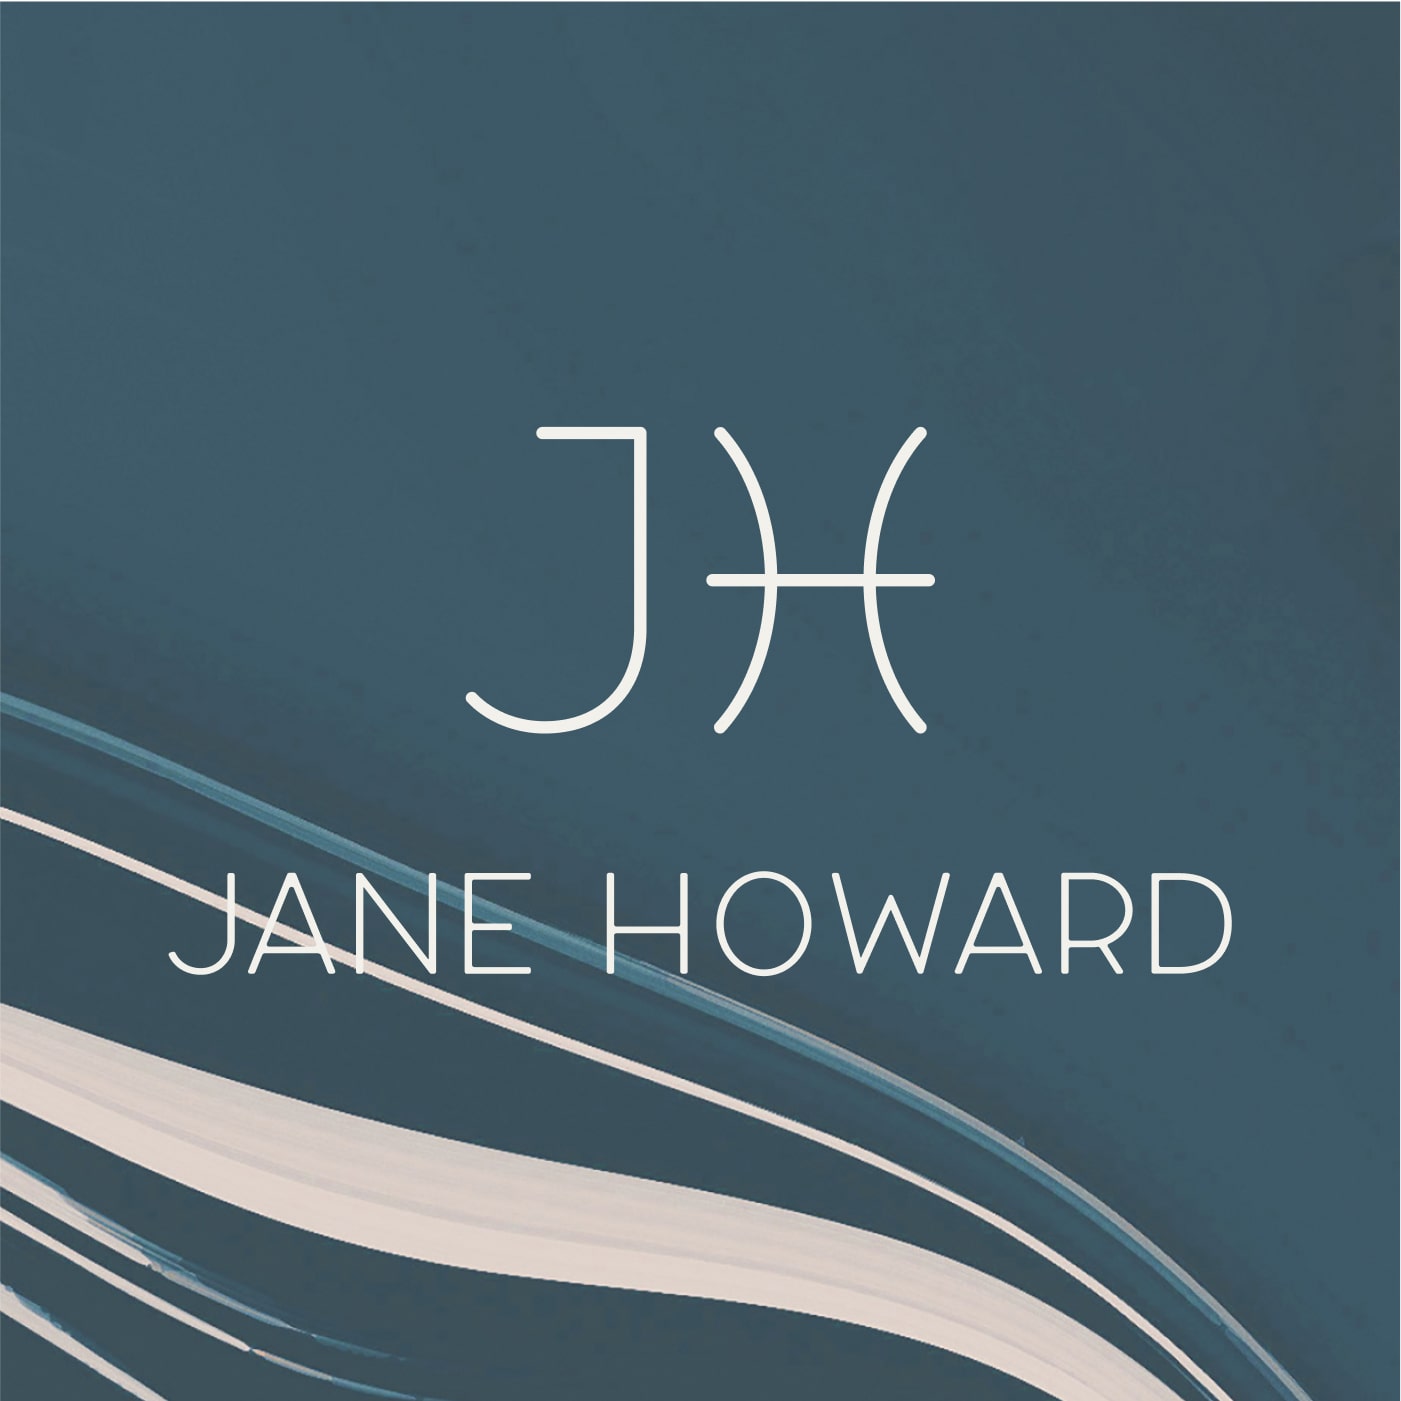 Jane Howard